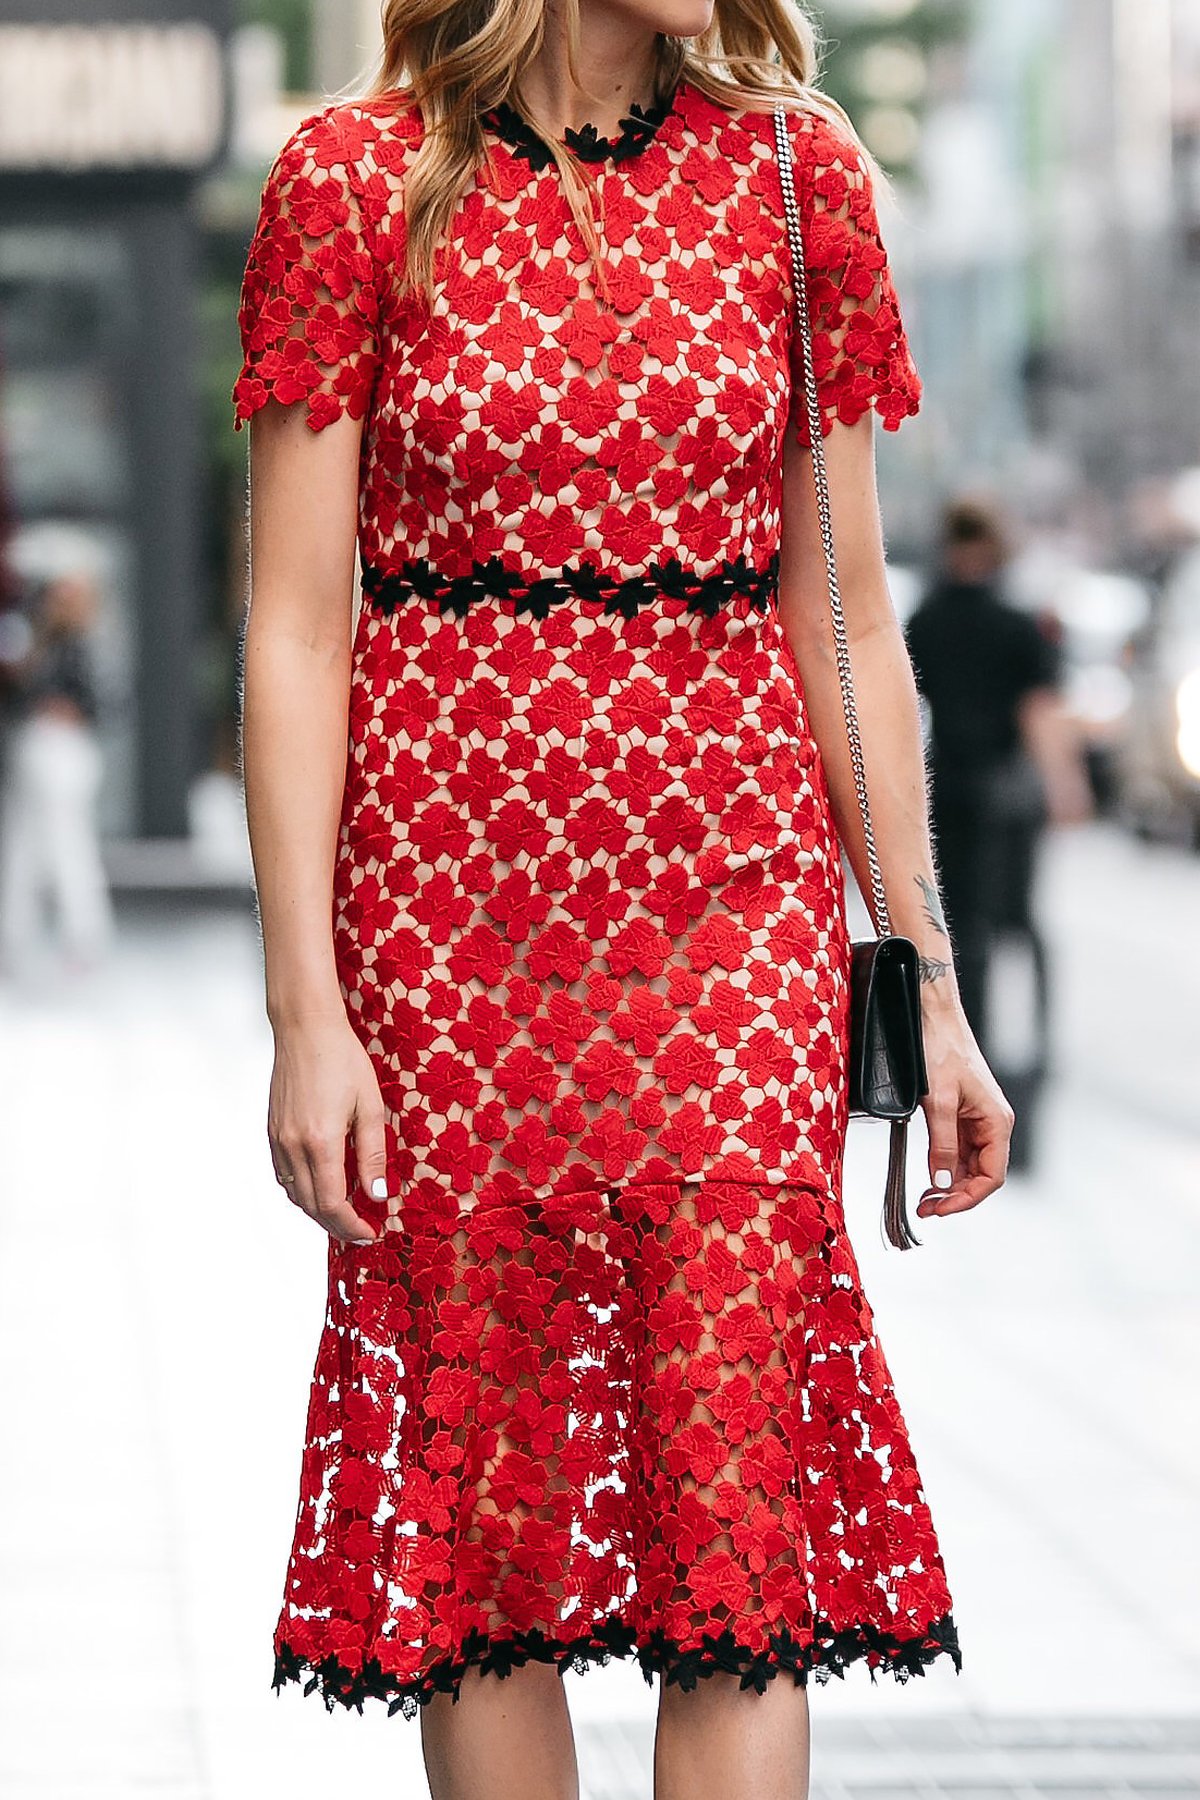 Fashion Jackson, Dallas Blogger, Fashion Blogger, Street Style, Jill Stuart Floral Red Lace Dress, Saint Laurent Monogram Handbag